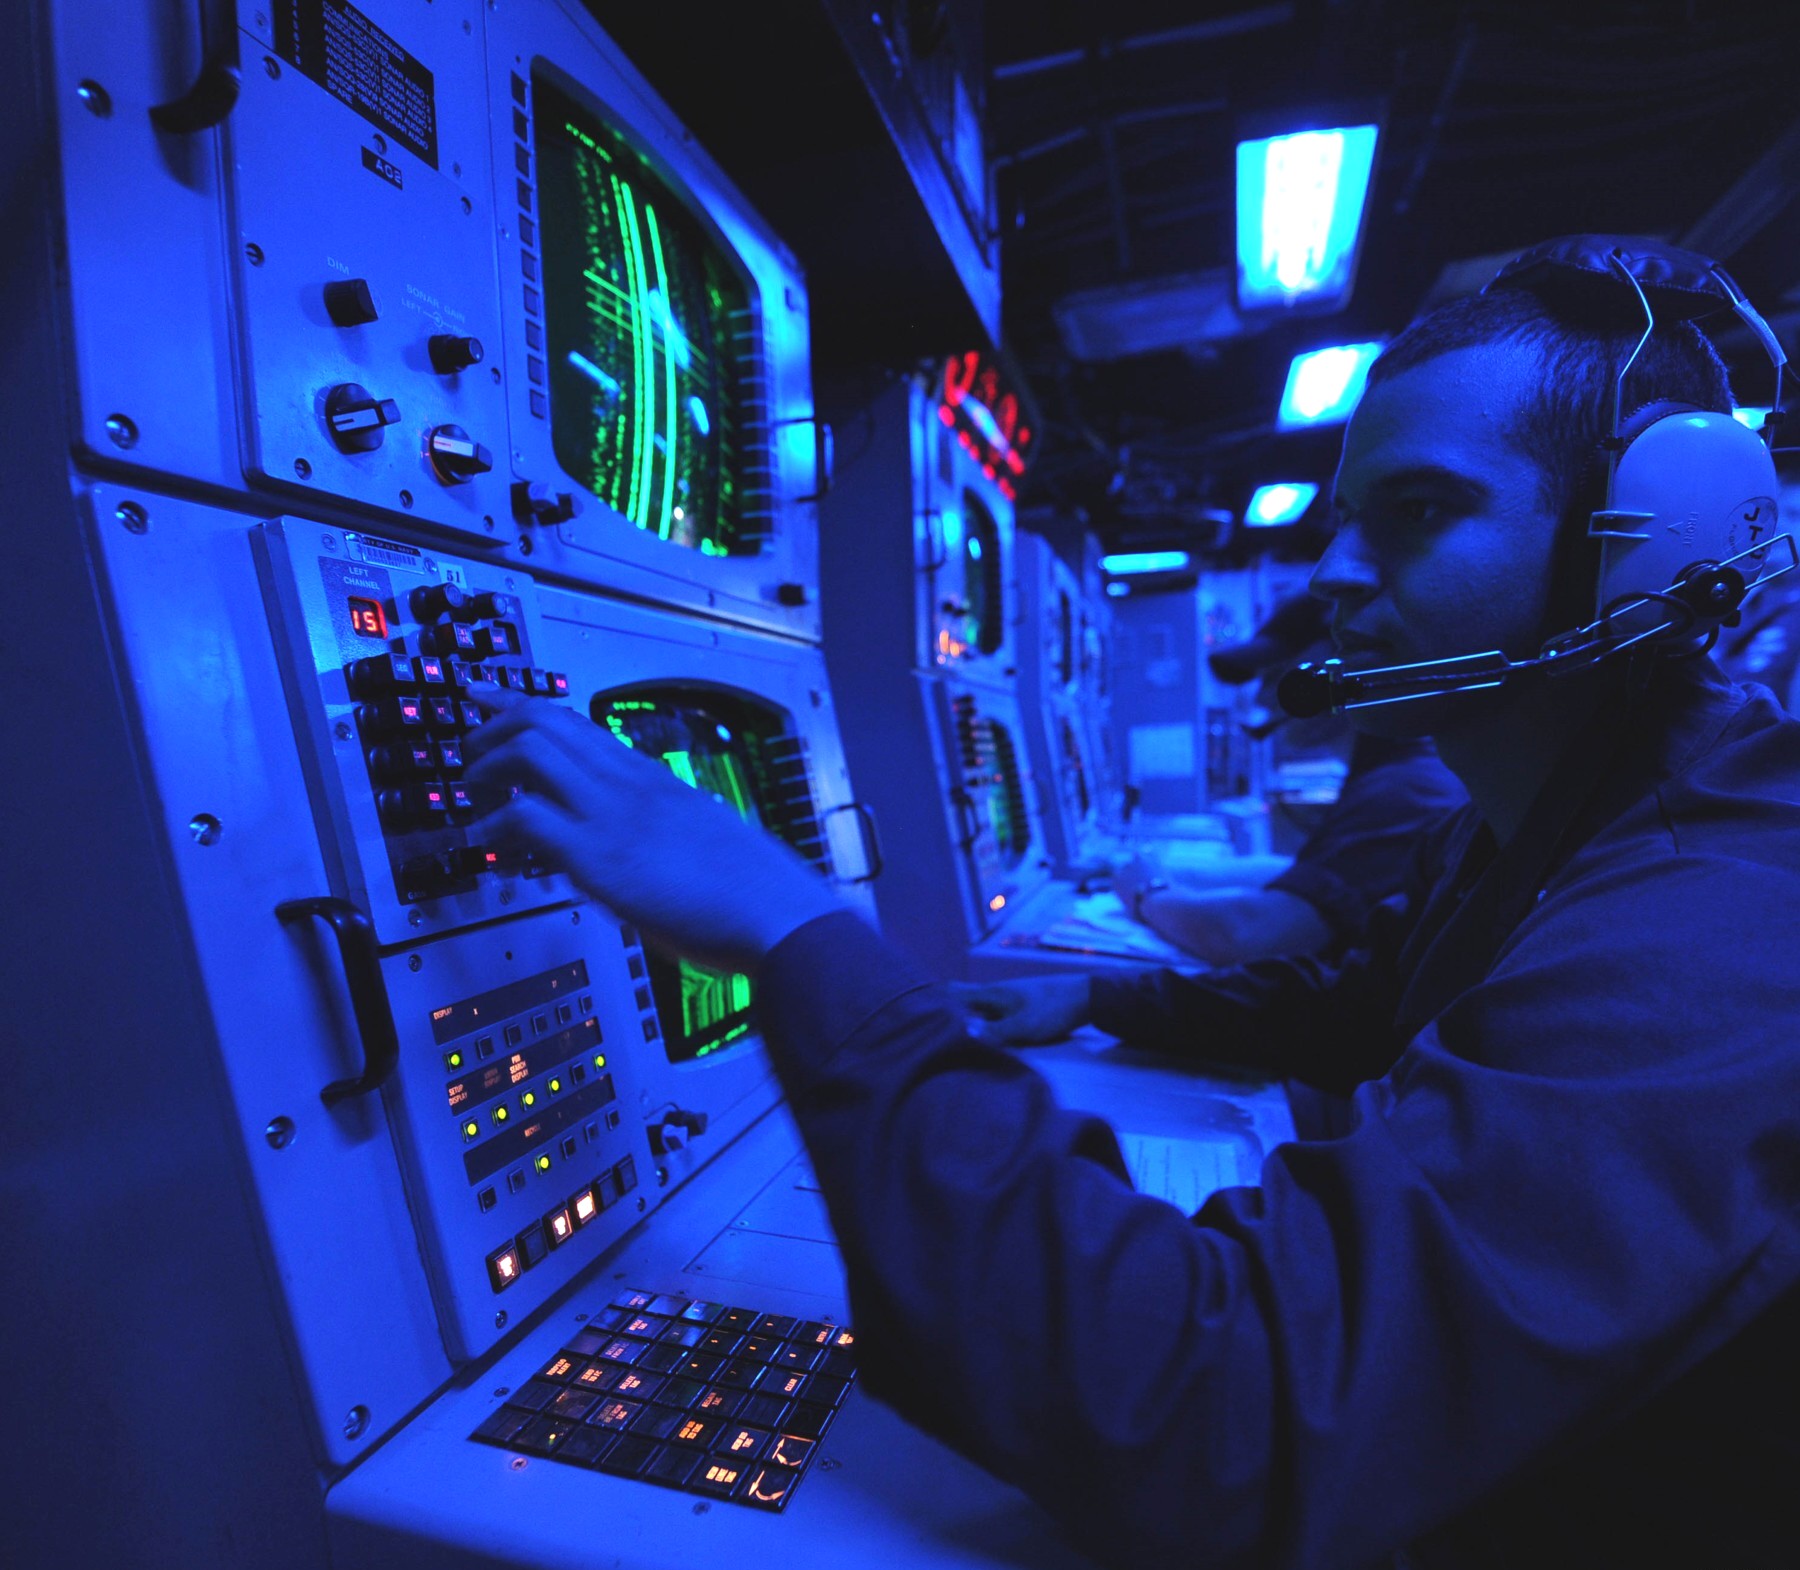 ddg-61 uss ramage guided missile destroyer arleigh burke class aegis us navy sonar control room 37